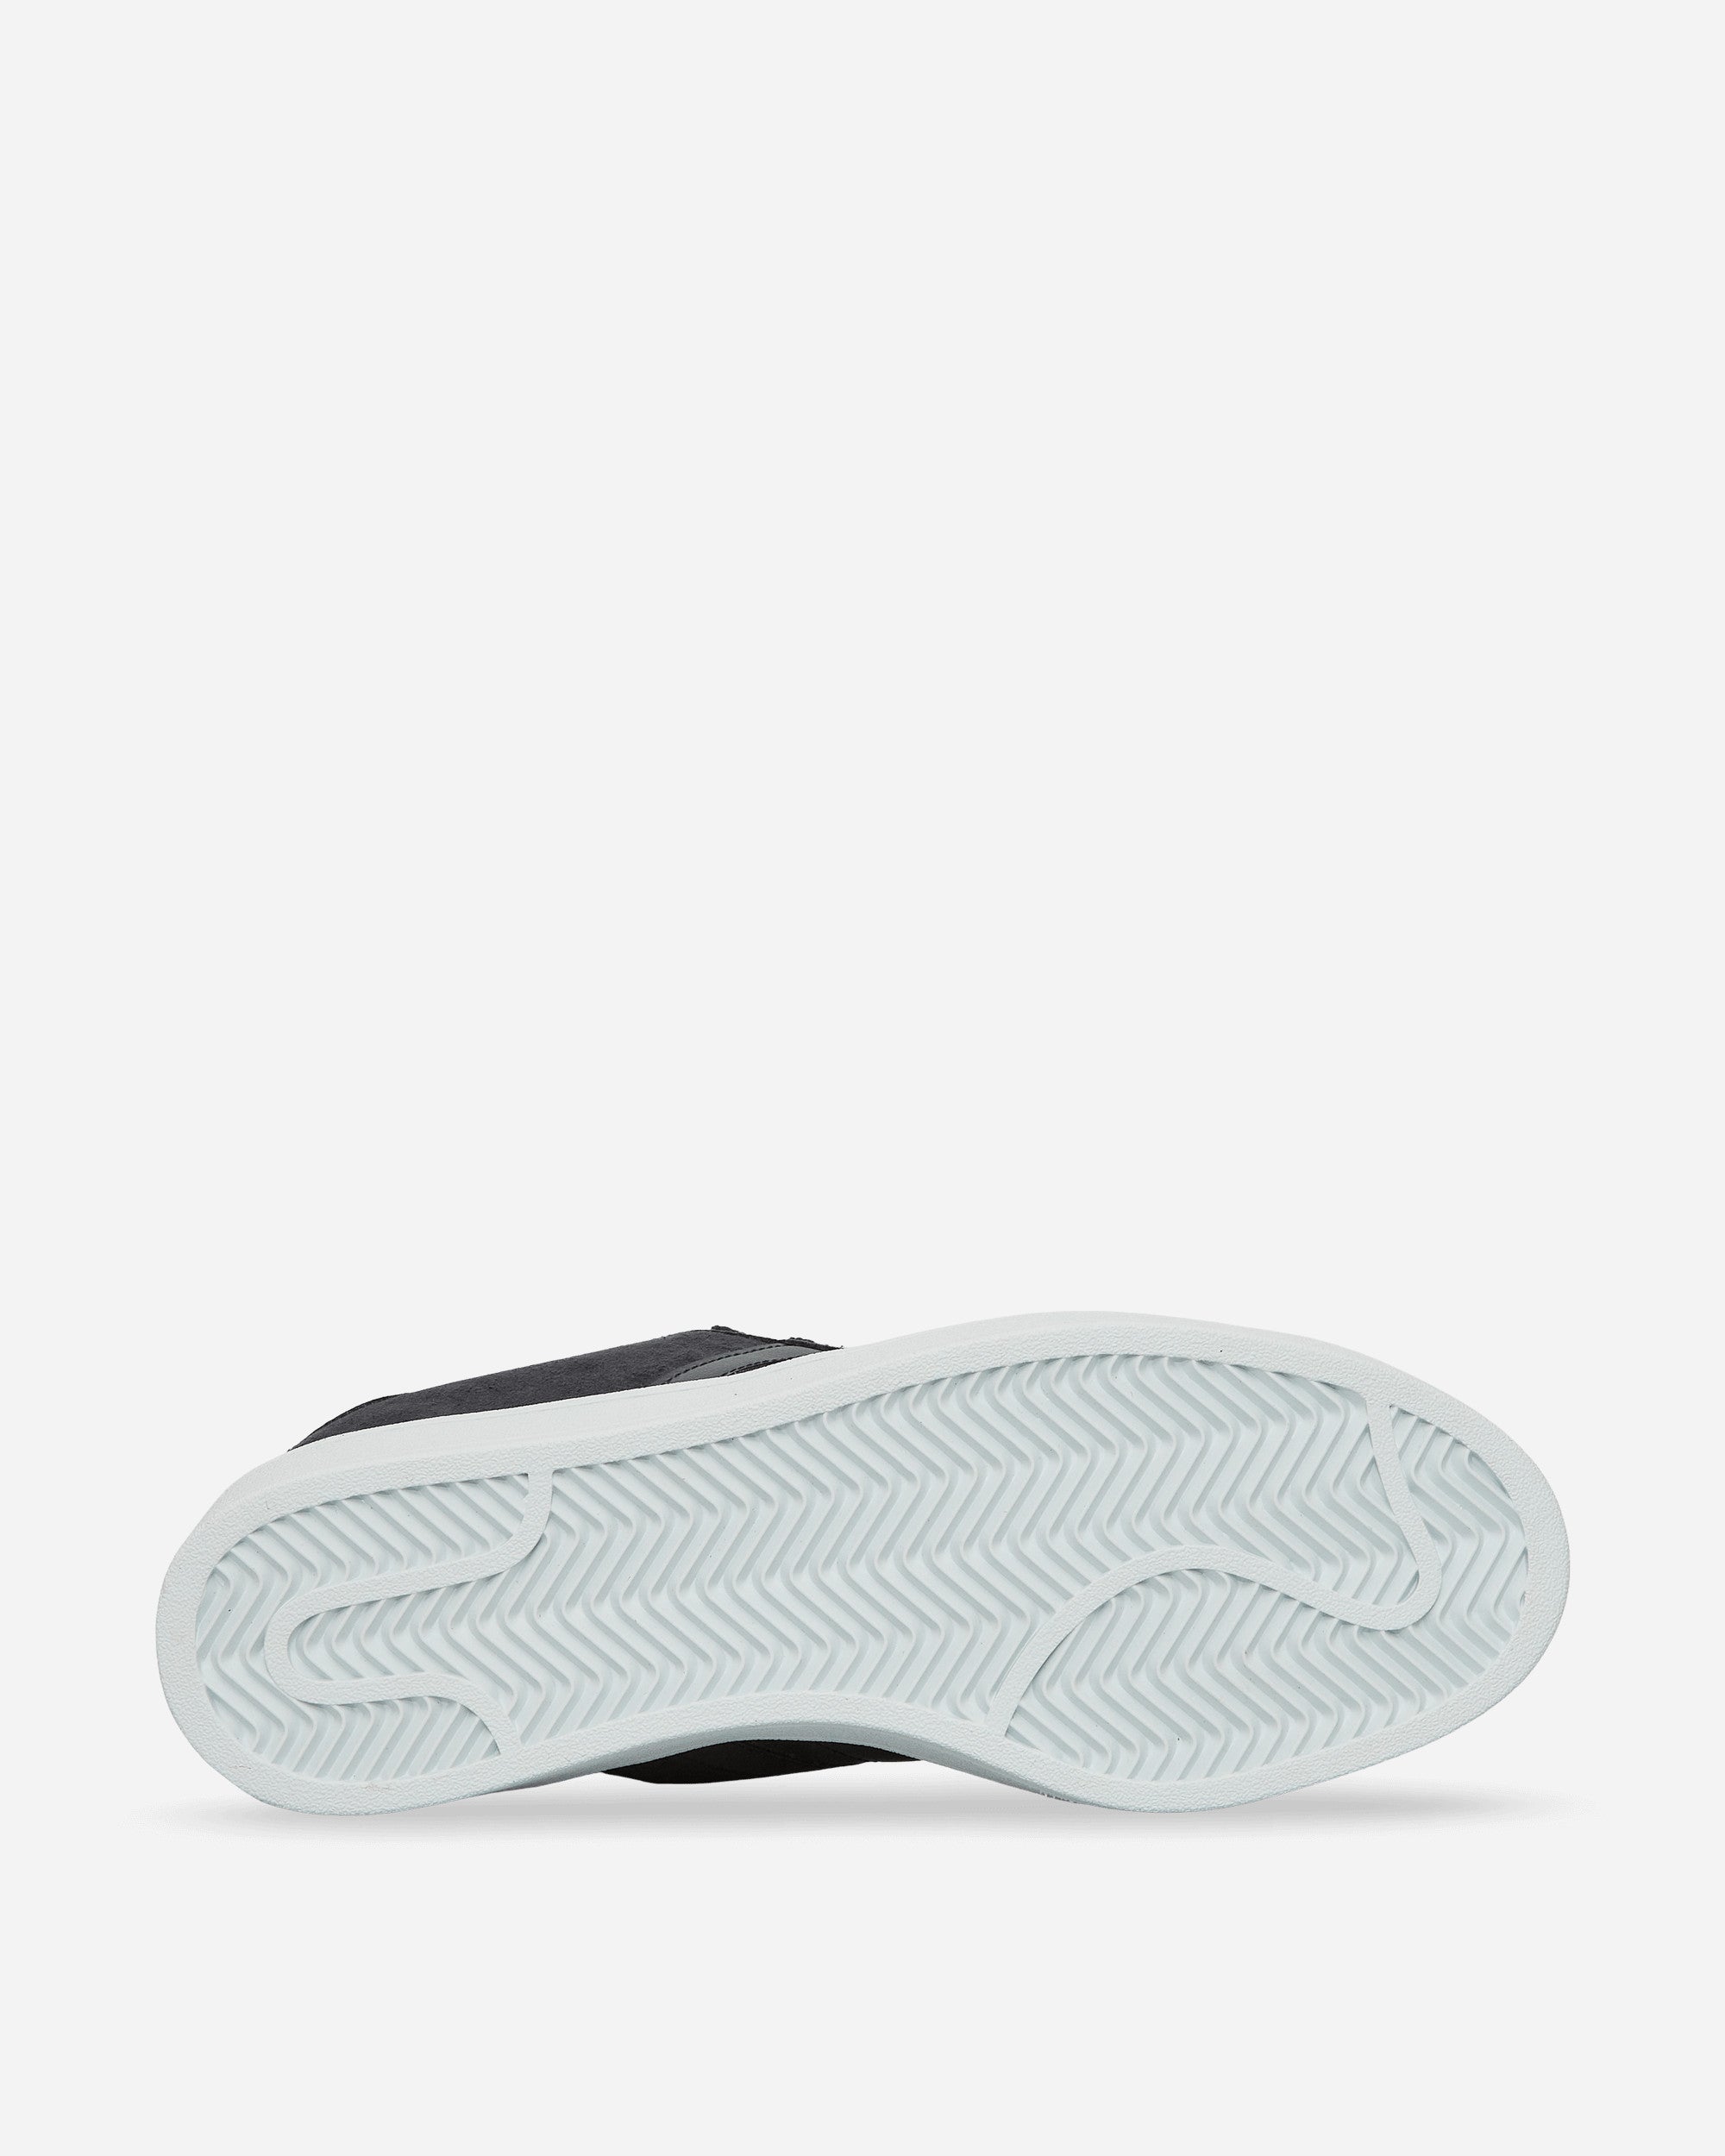 adidas Consortium Campus Dcdt Dark Grey/Dark Grey Sneakers Low HQ8875